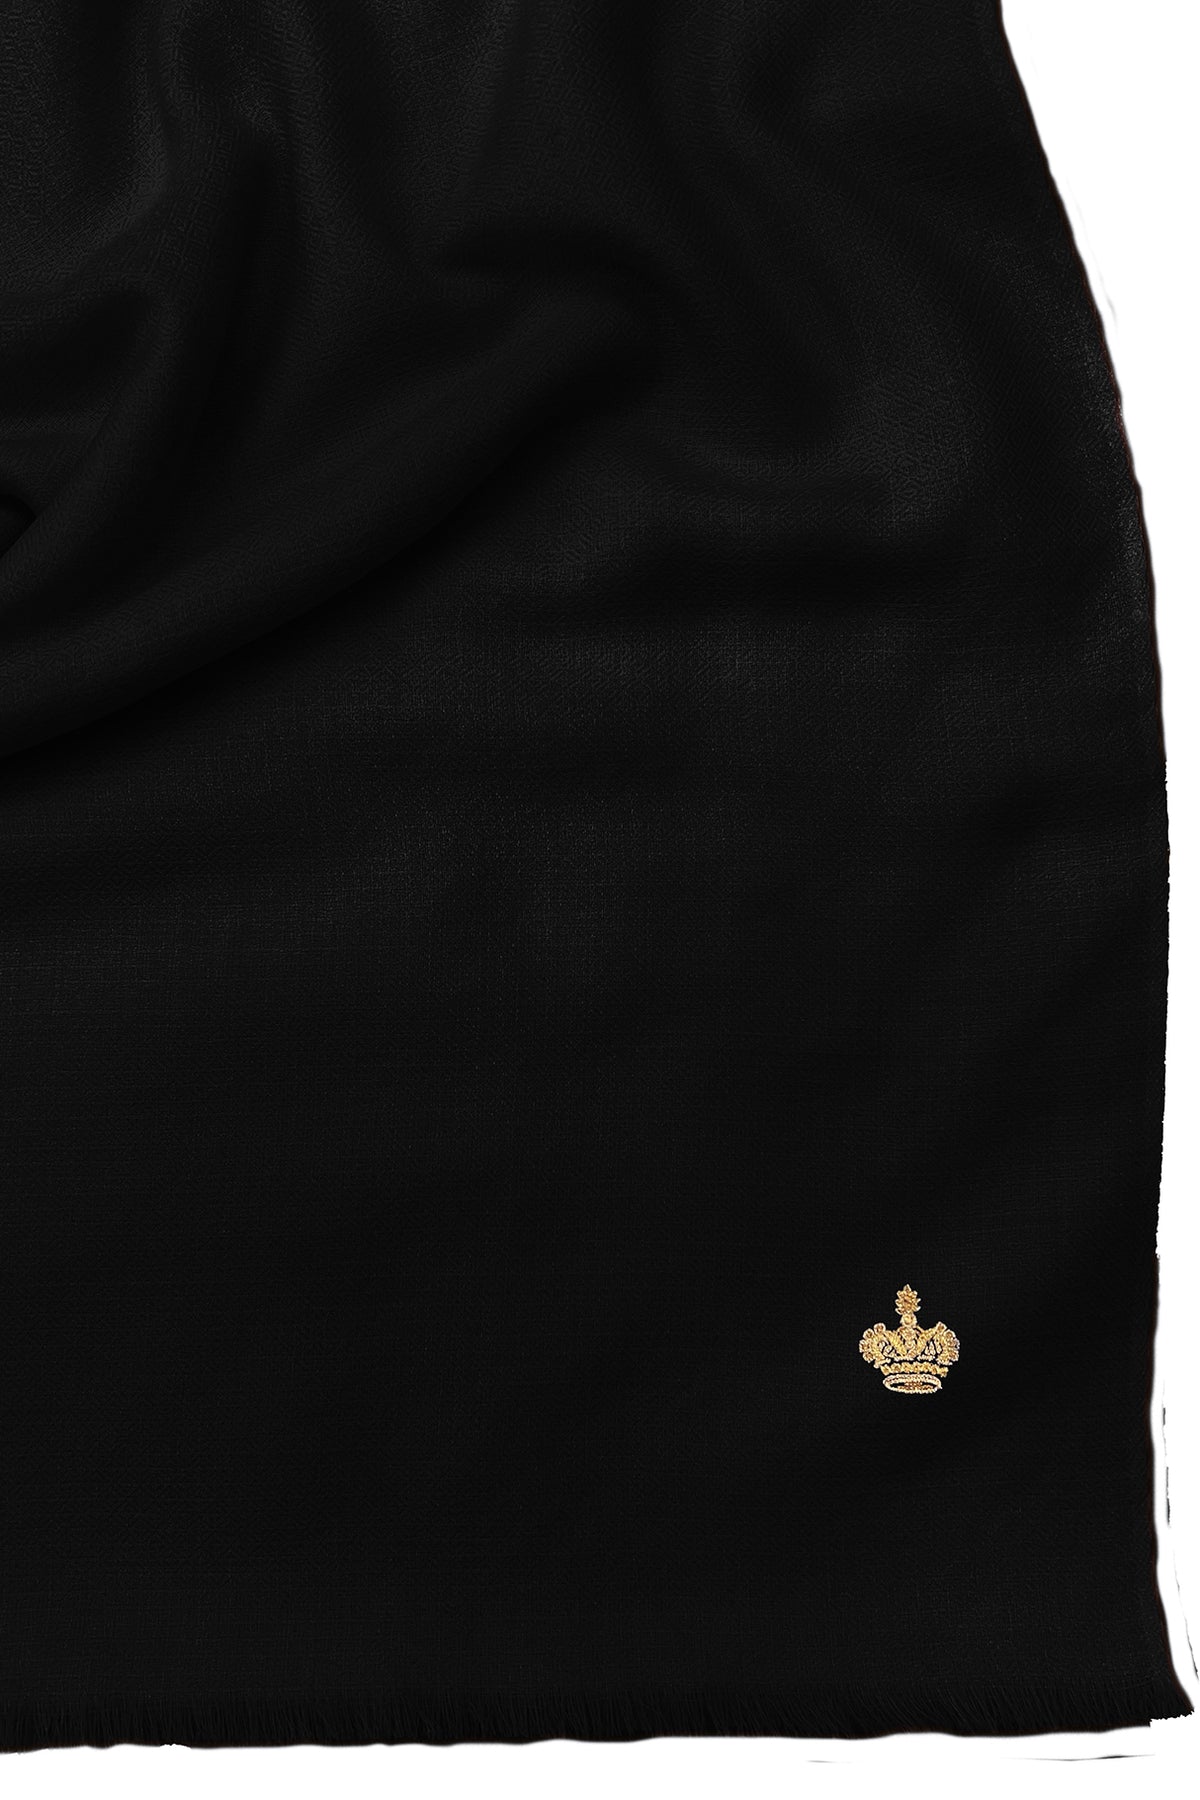 The Crown | Diamond Weave Pure Cashmere Personalized Stole